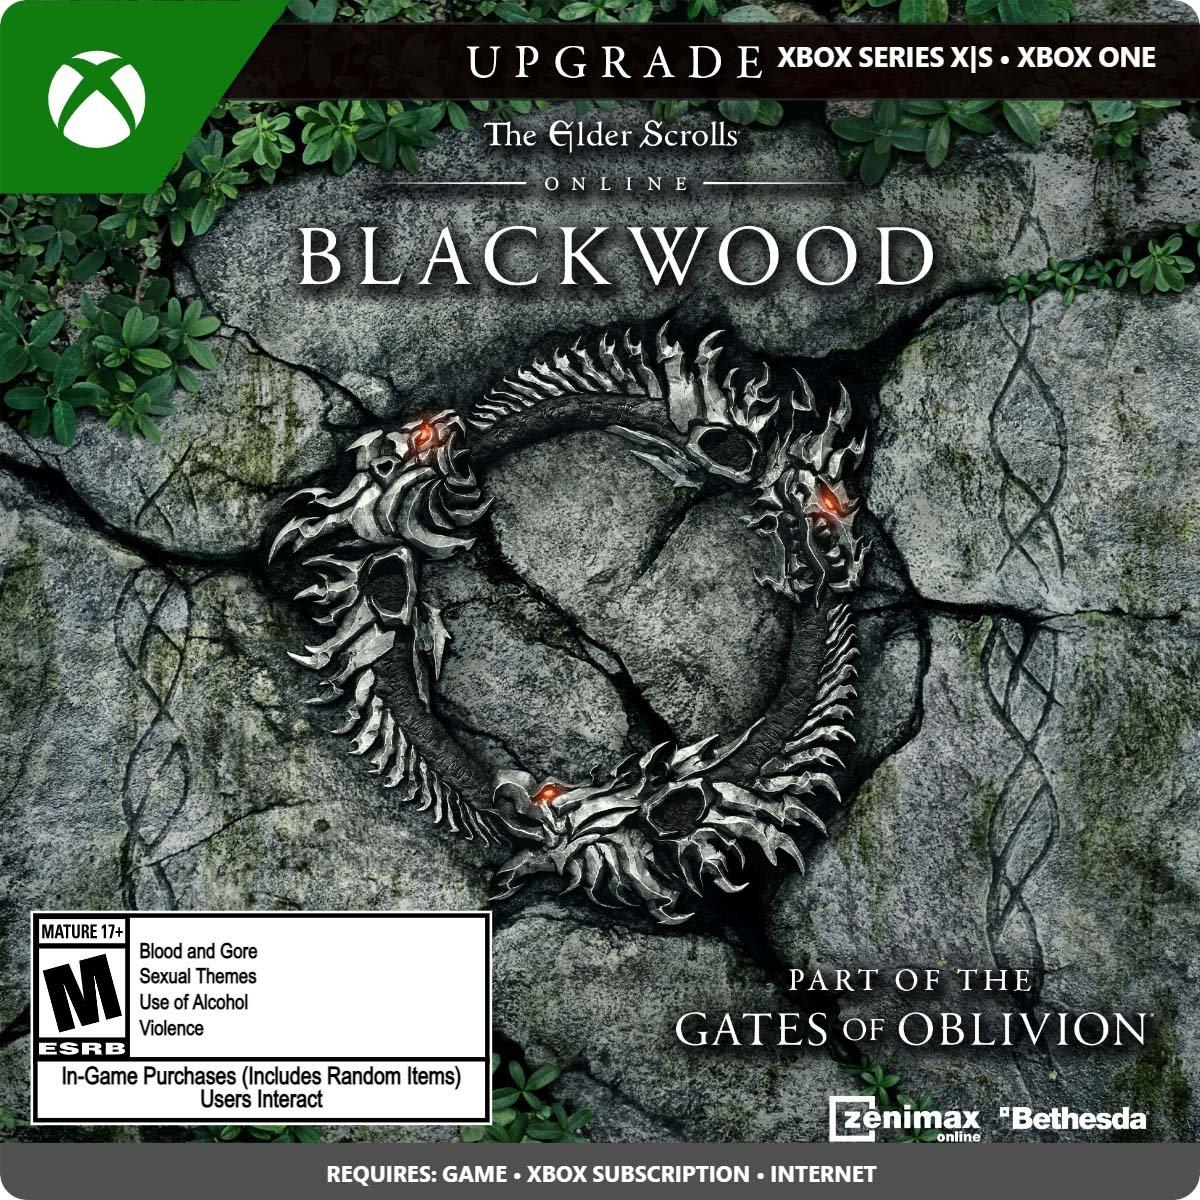 The Elder Scrolls Online Collection: Blackwood Upgrade DLC